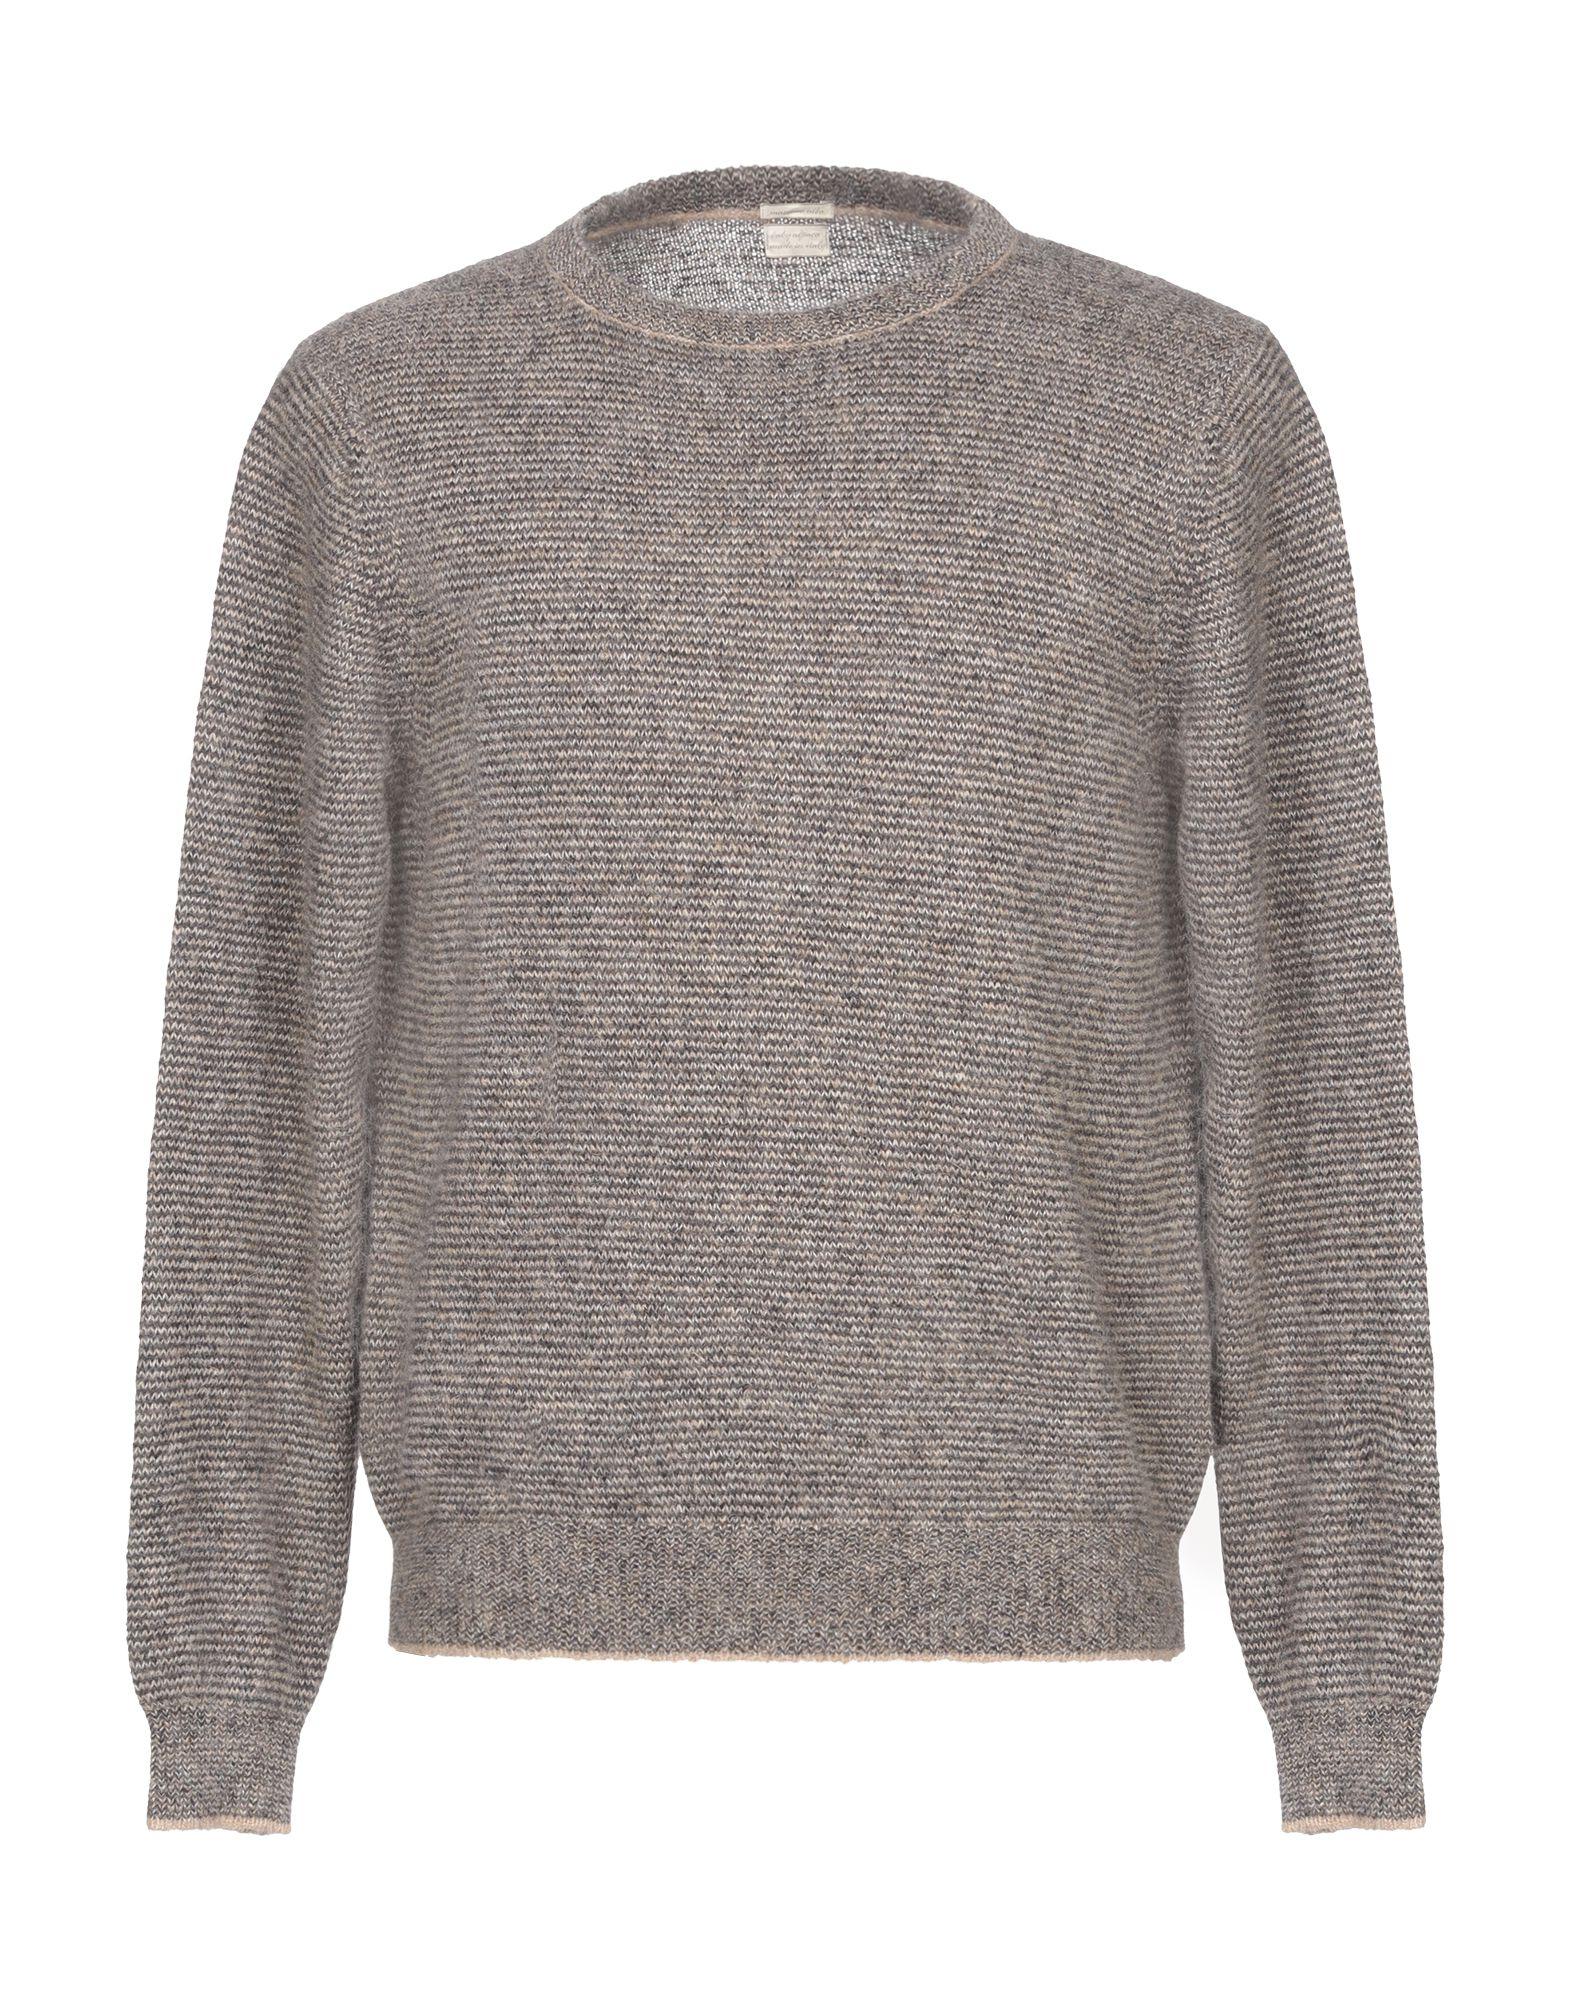 Massimo Alba Sweater in Gray for Men - Lyst